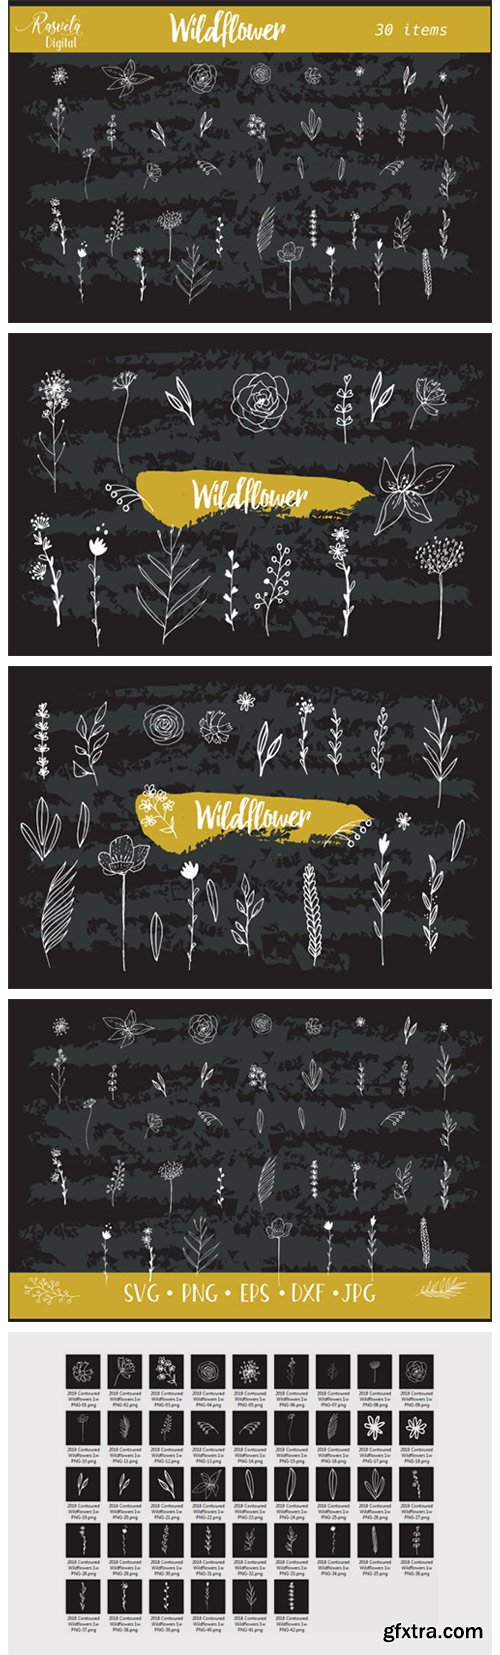 Wedding Wildflower Flowers 4090859